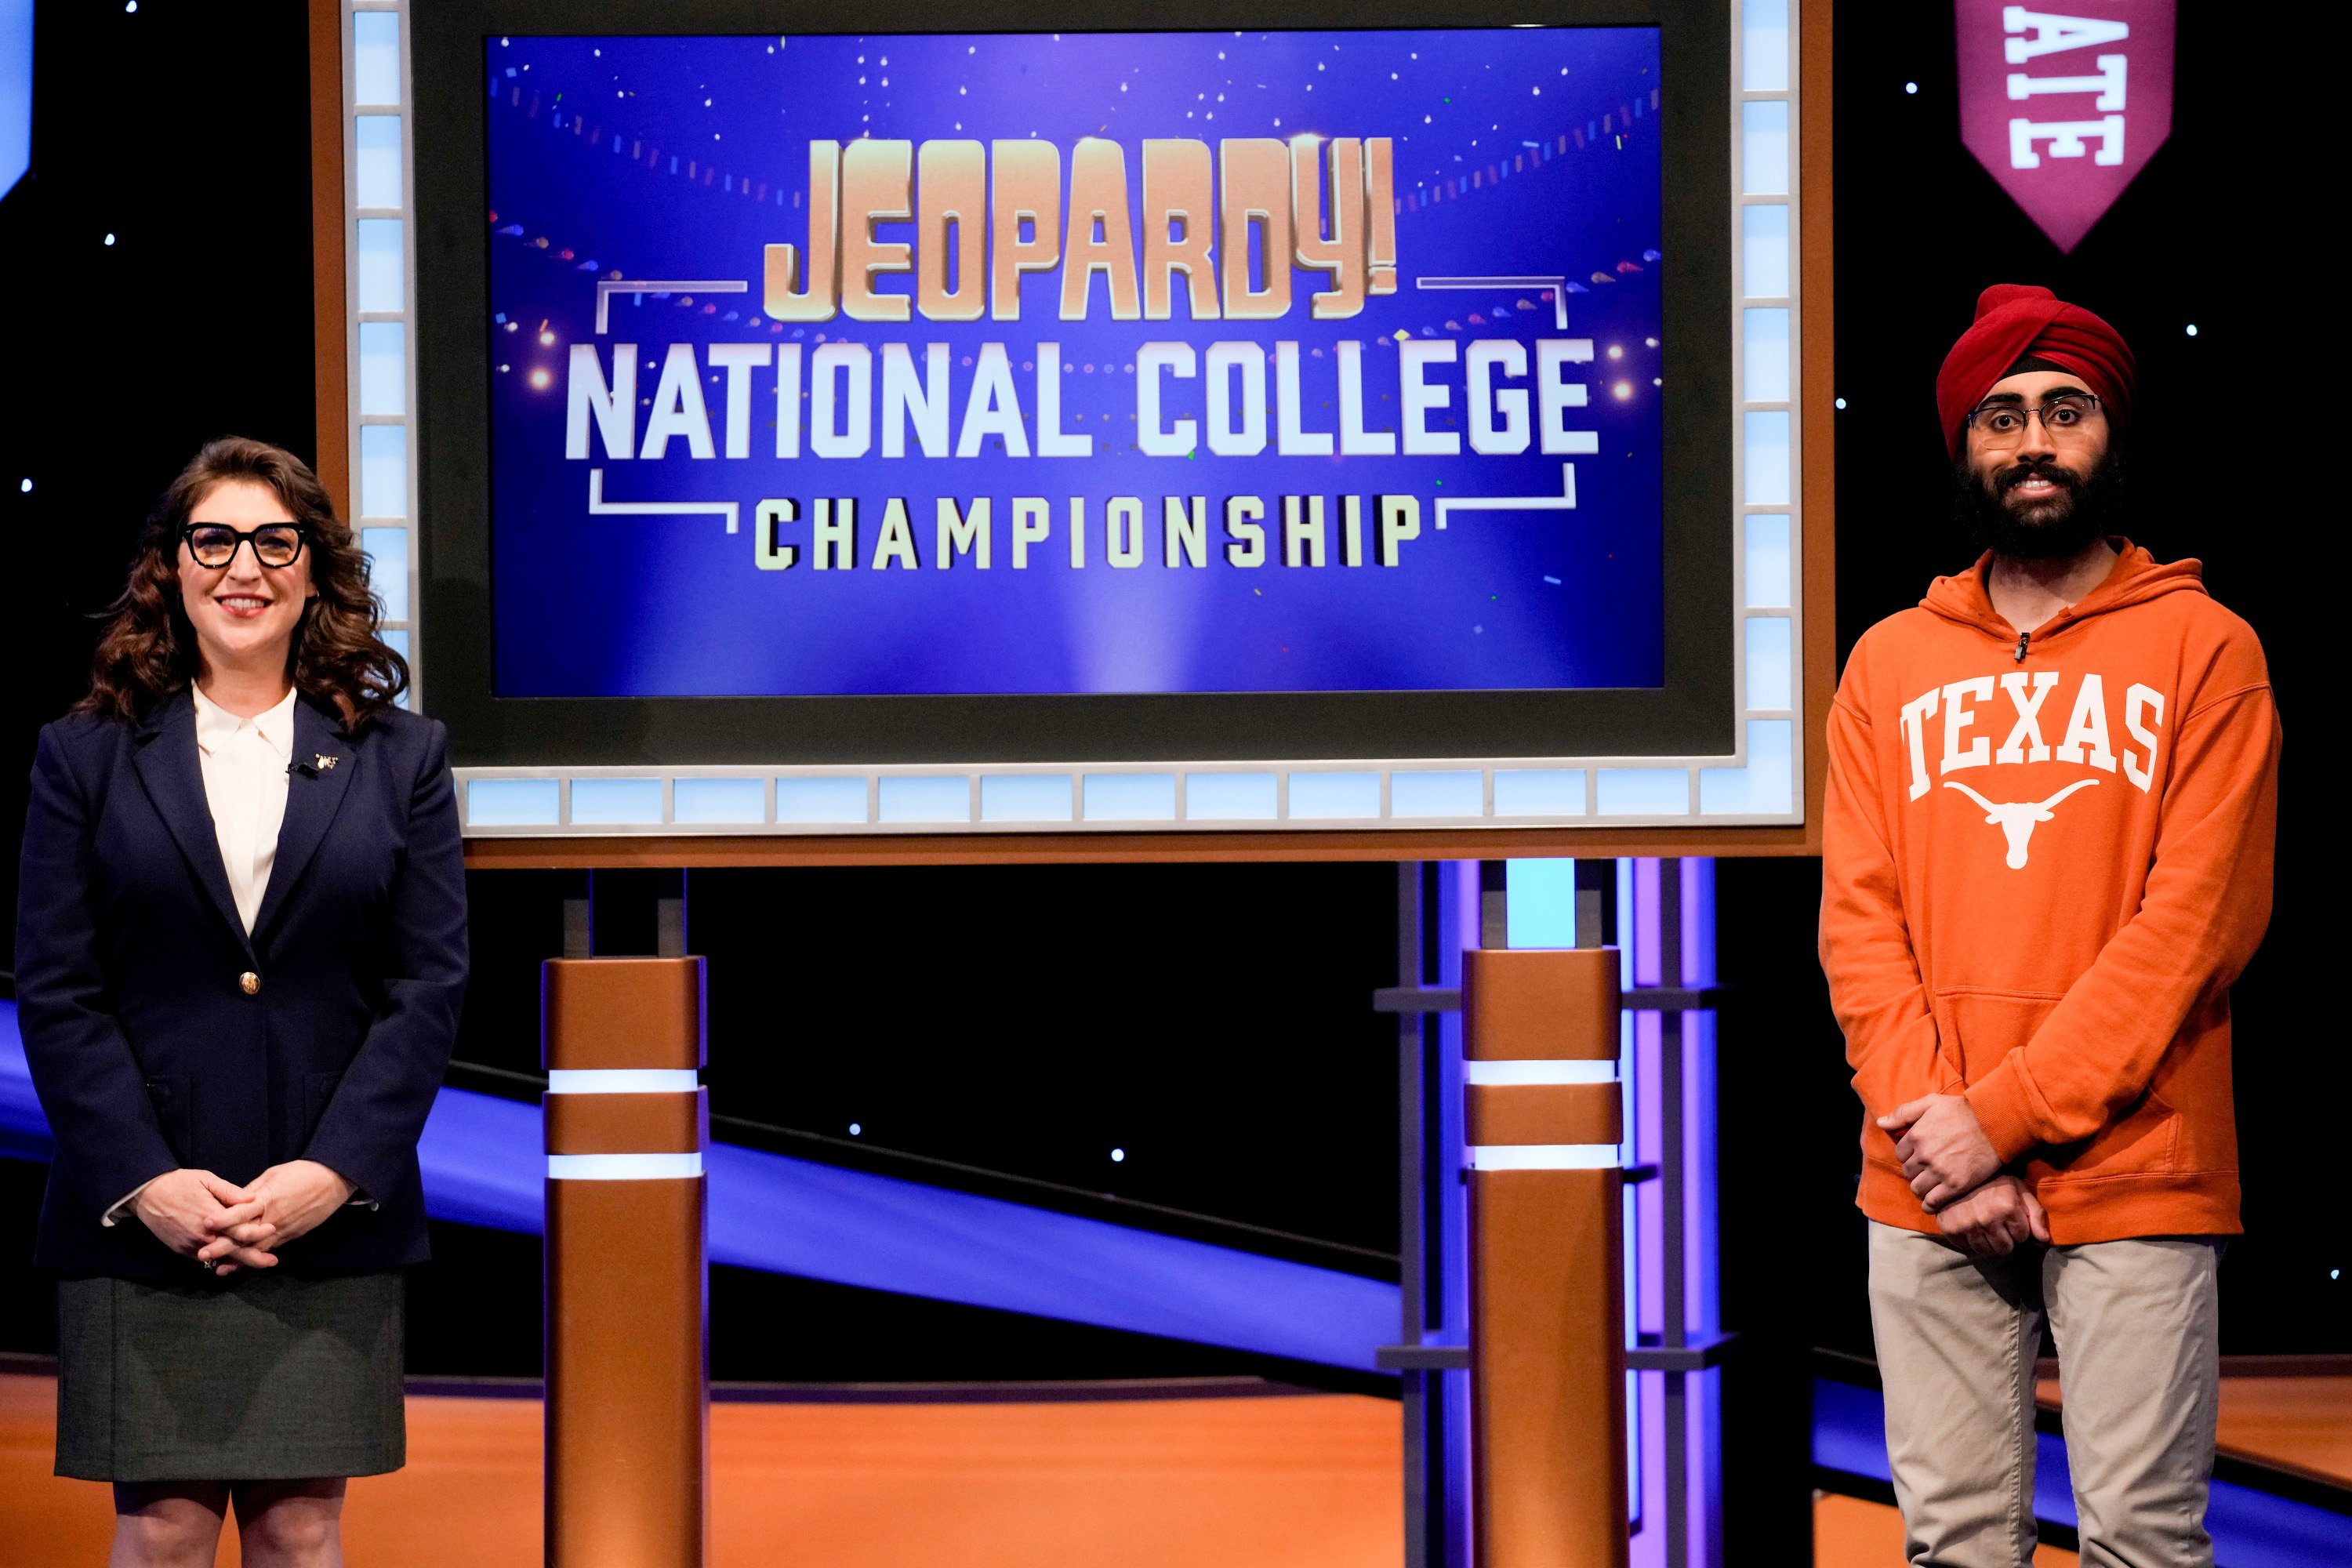 ‘Jeopardy!’: UT Student Jaskaran Singh Wins National College Championship